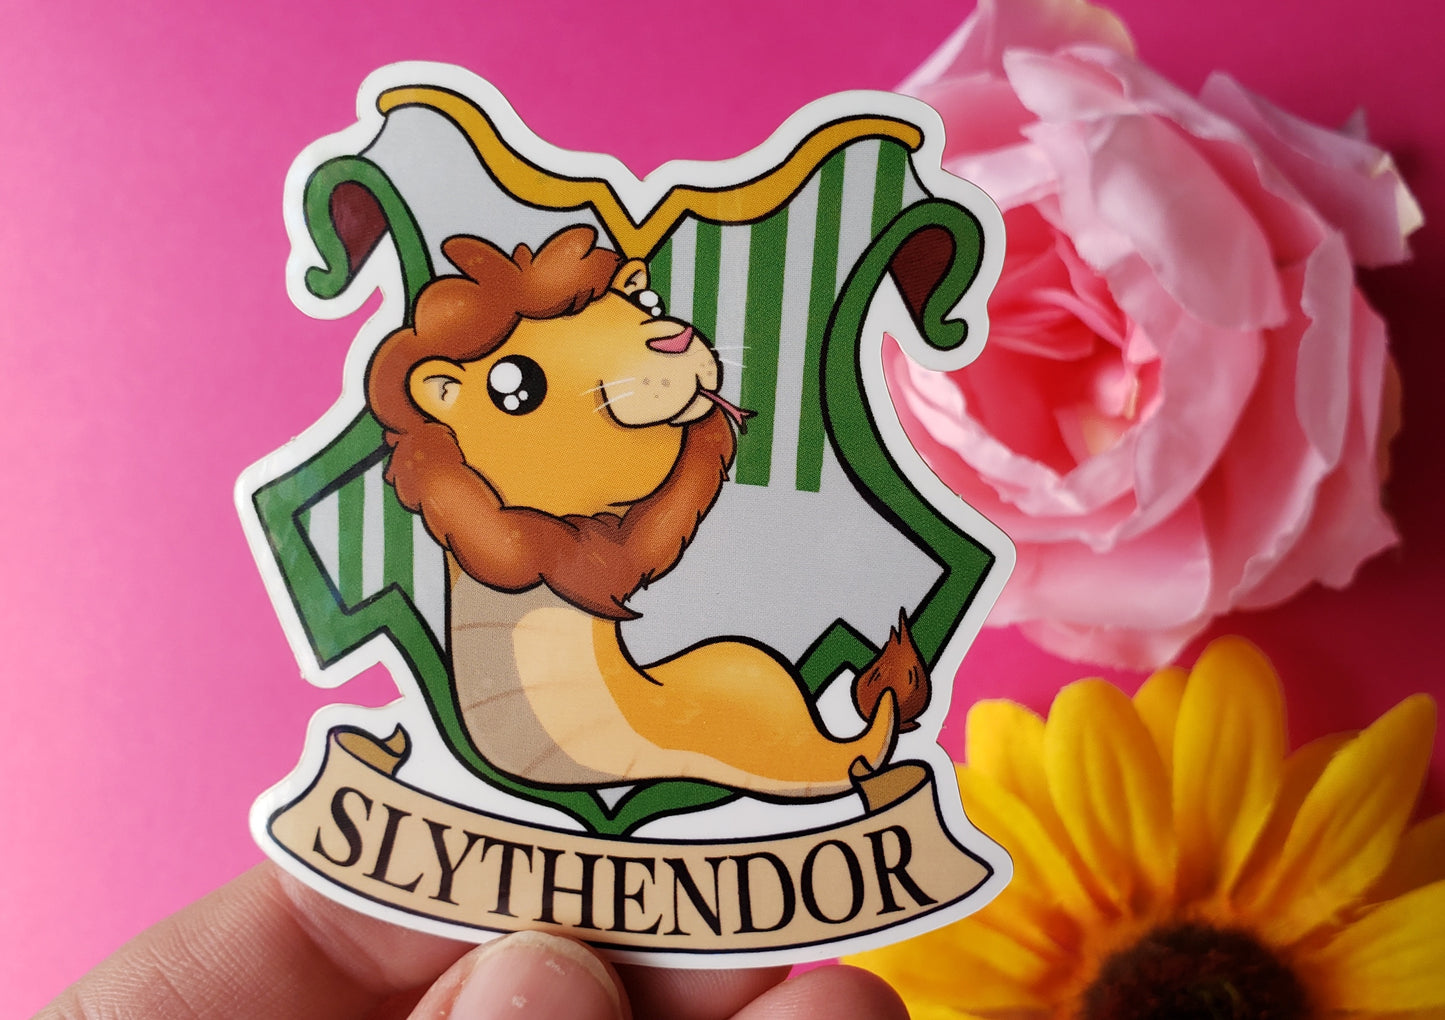 Slythendor Sticker (slytherin + gryffindor)